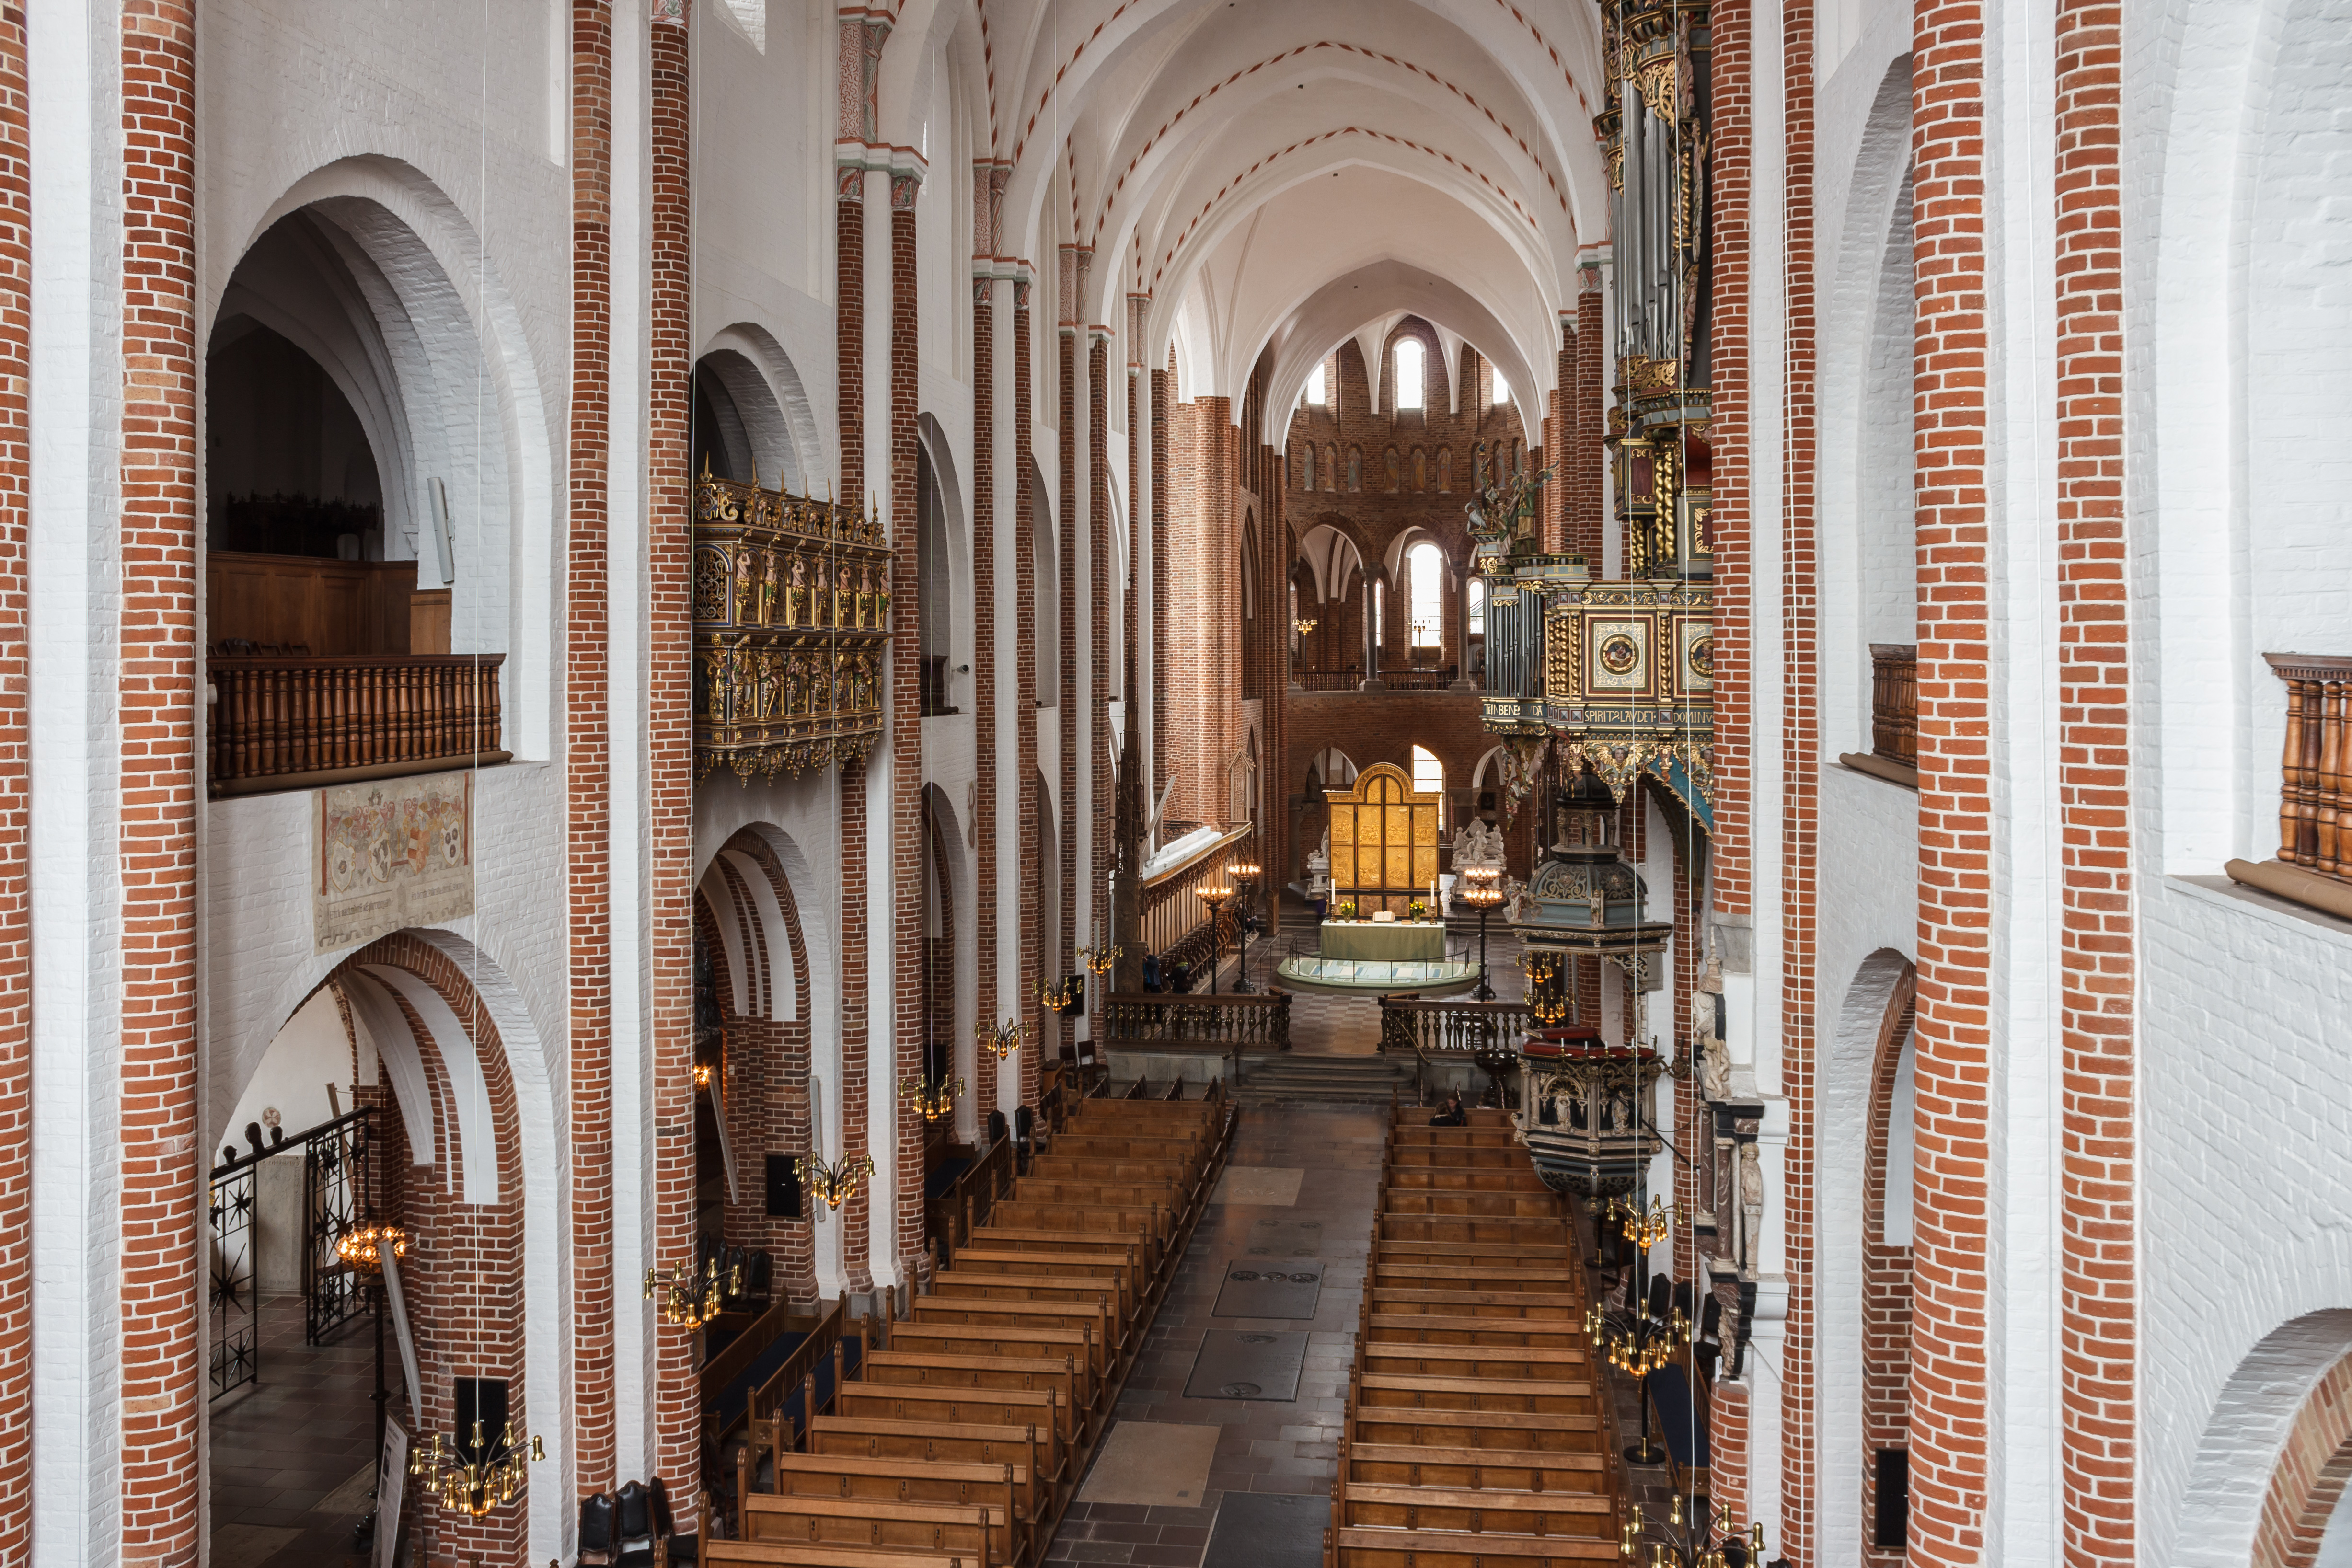 Nave, Roskilde Cathedral, Denmark, 2015-03-31-4819